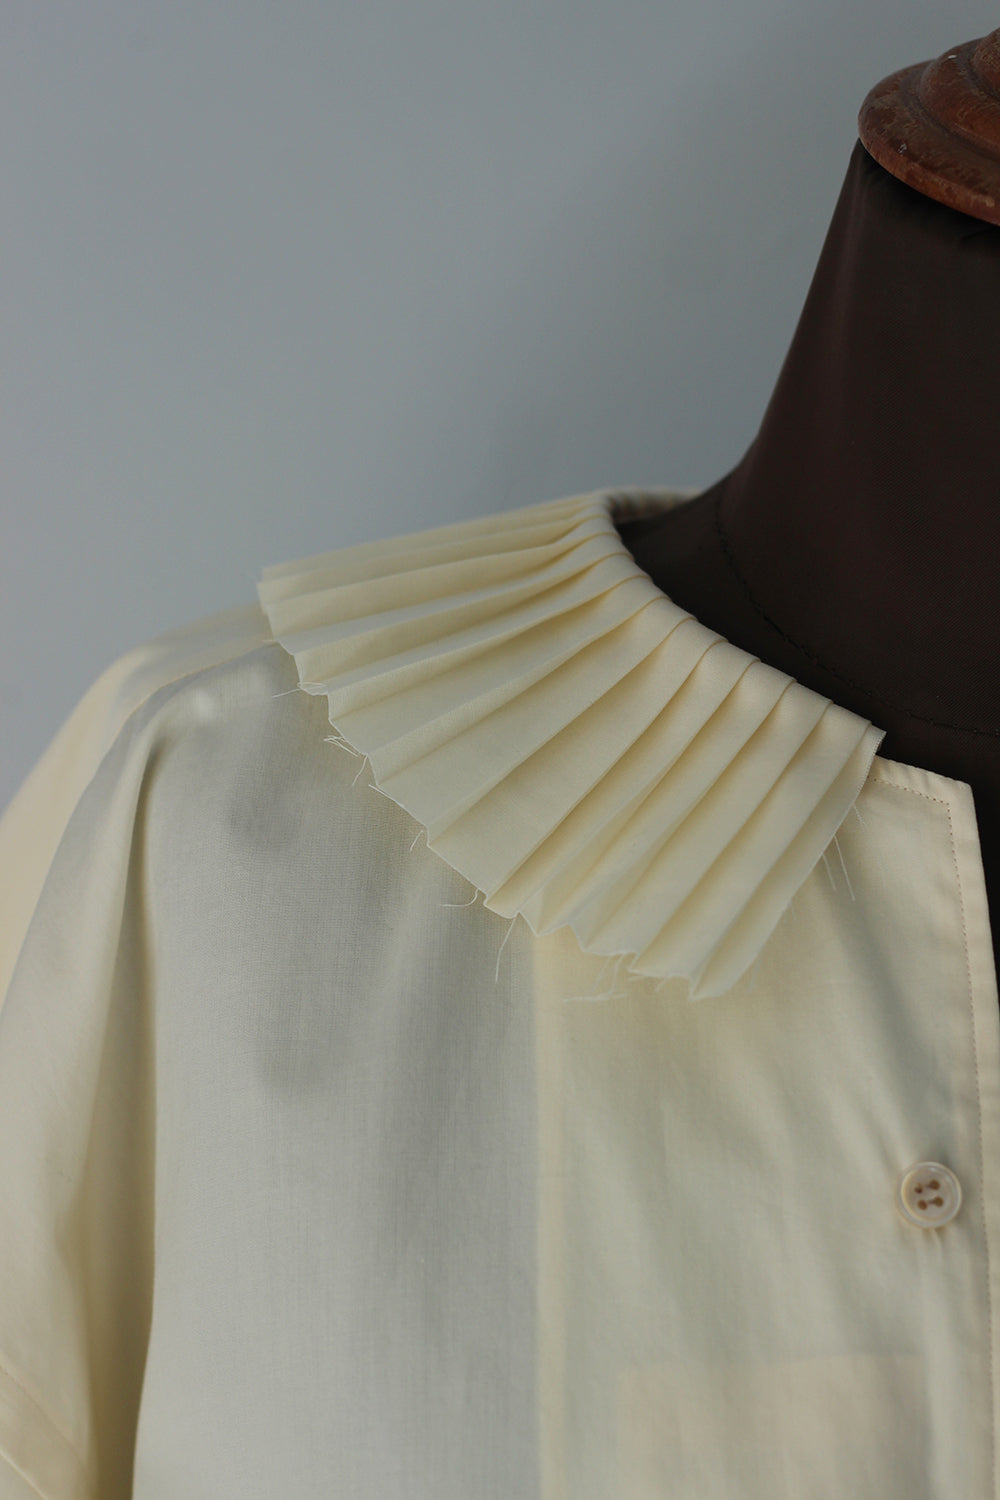 JUN MIKAMI "pleats collar shirt" (cream)